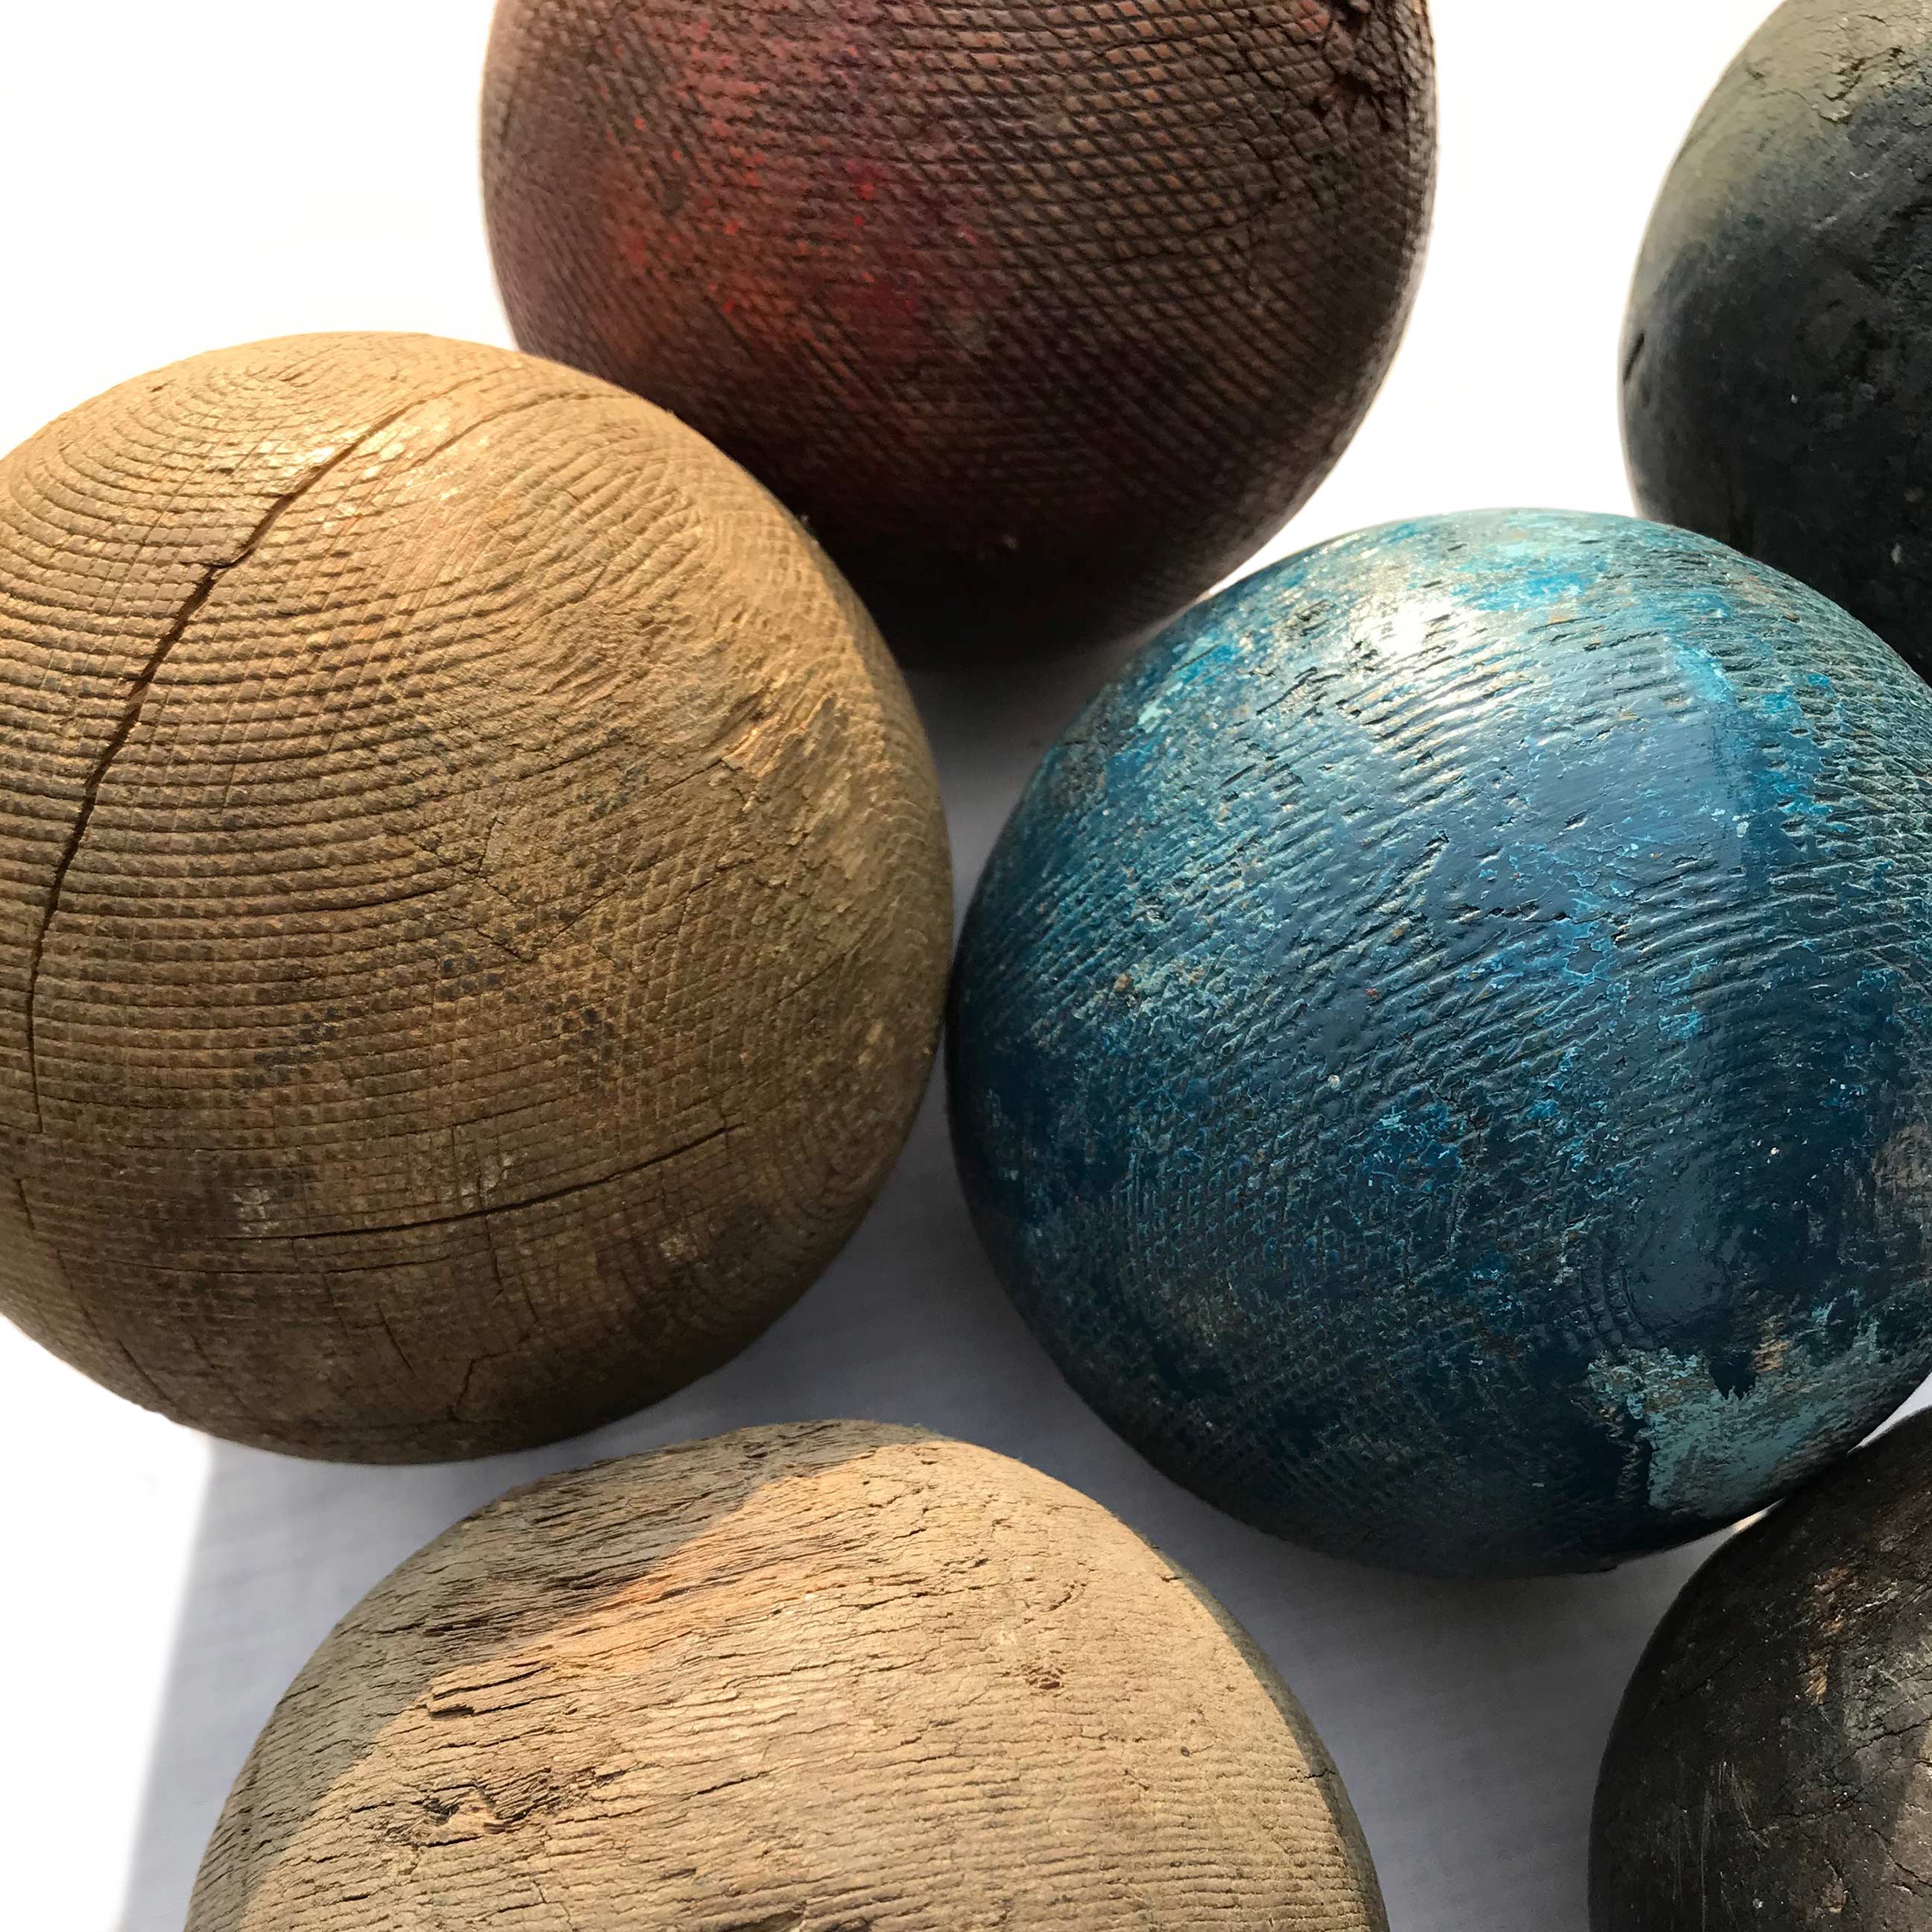 Old Wooden Balls